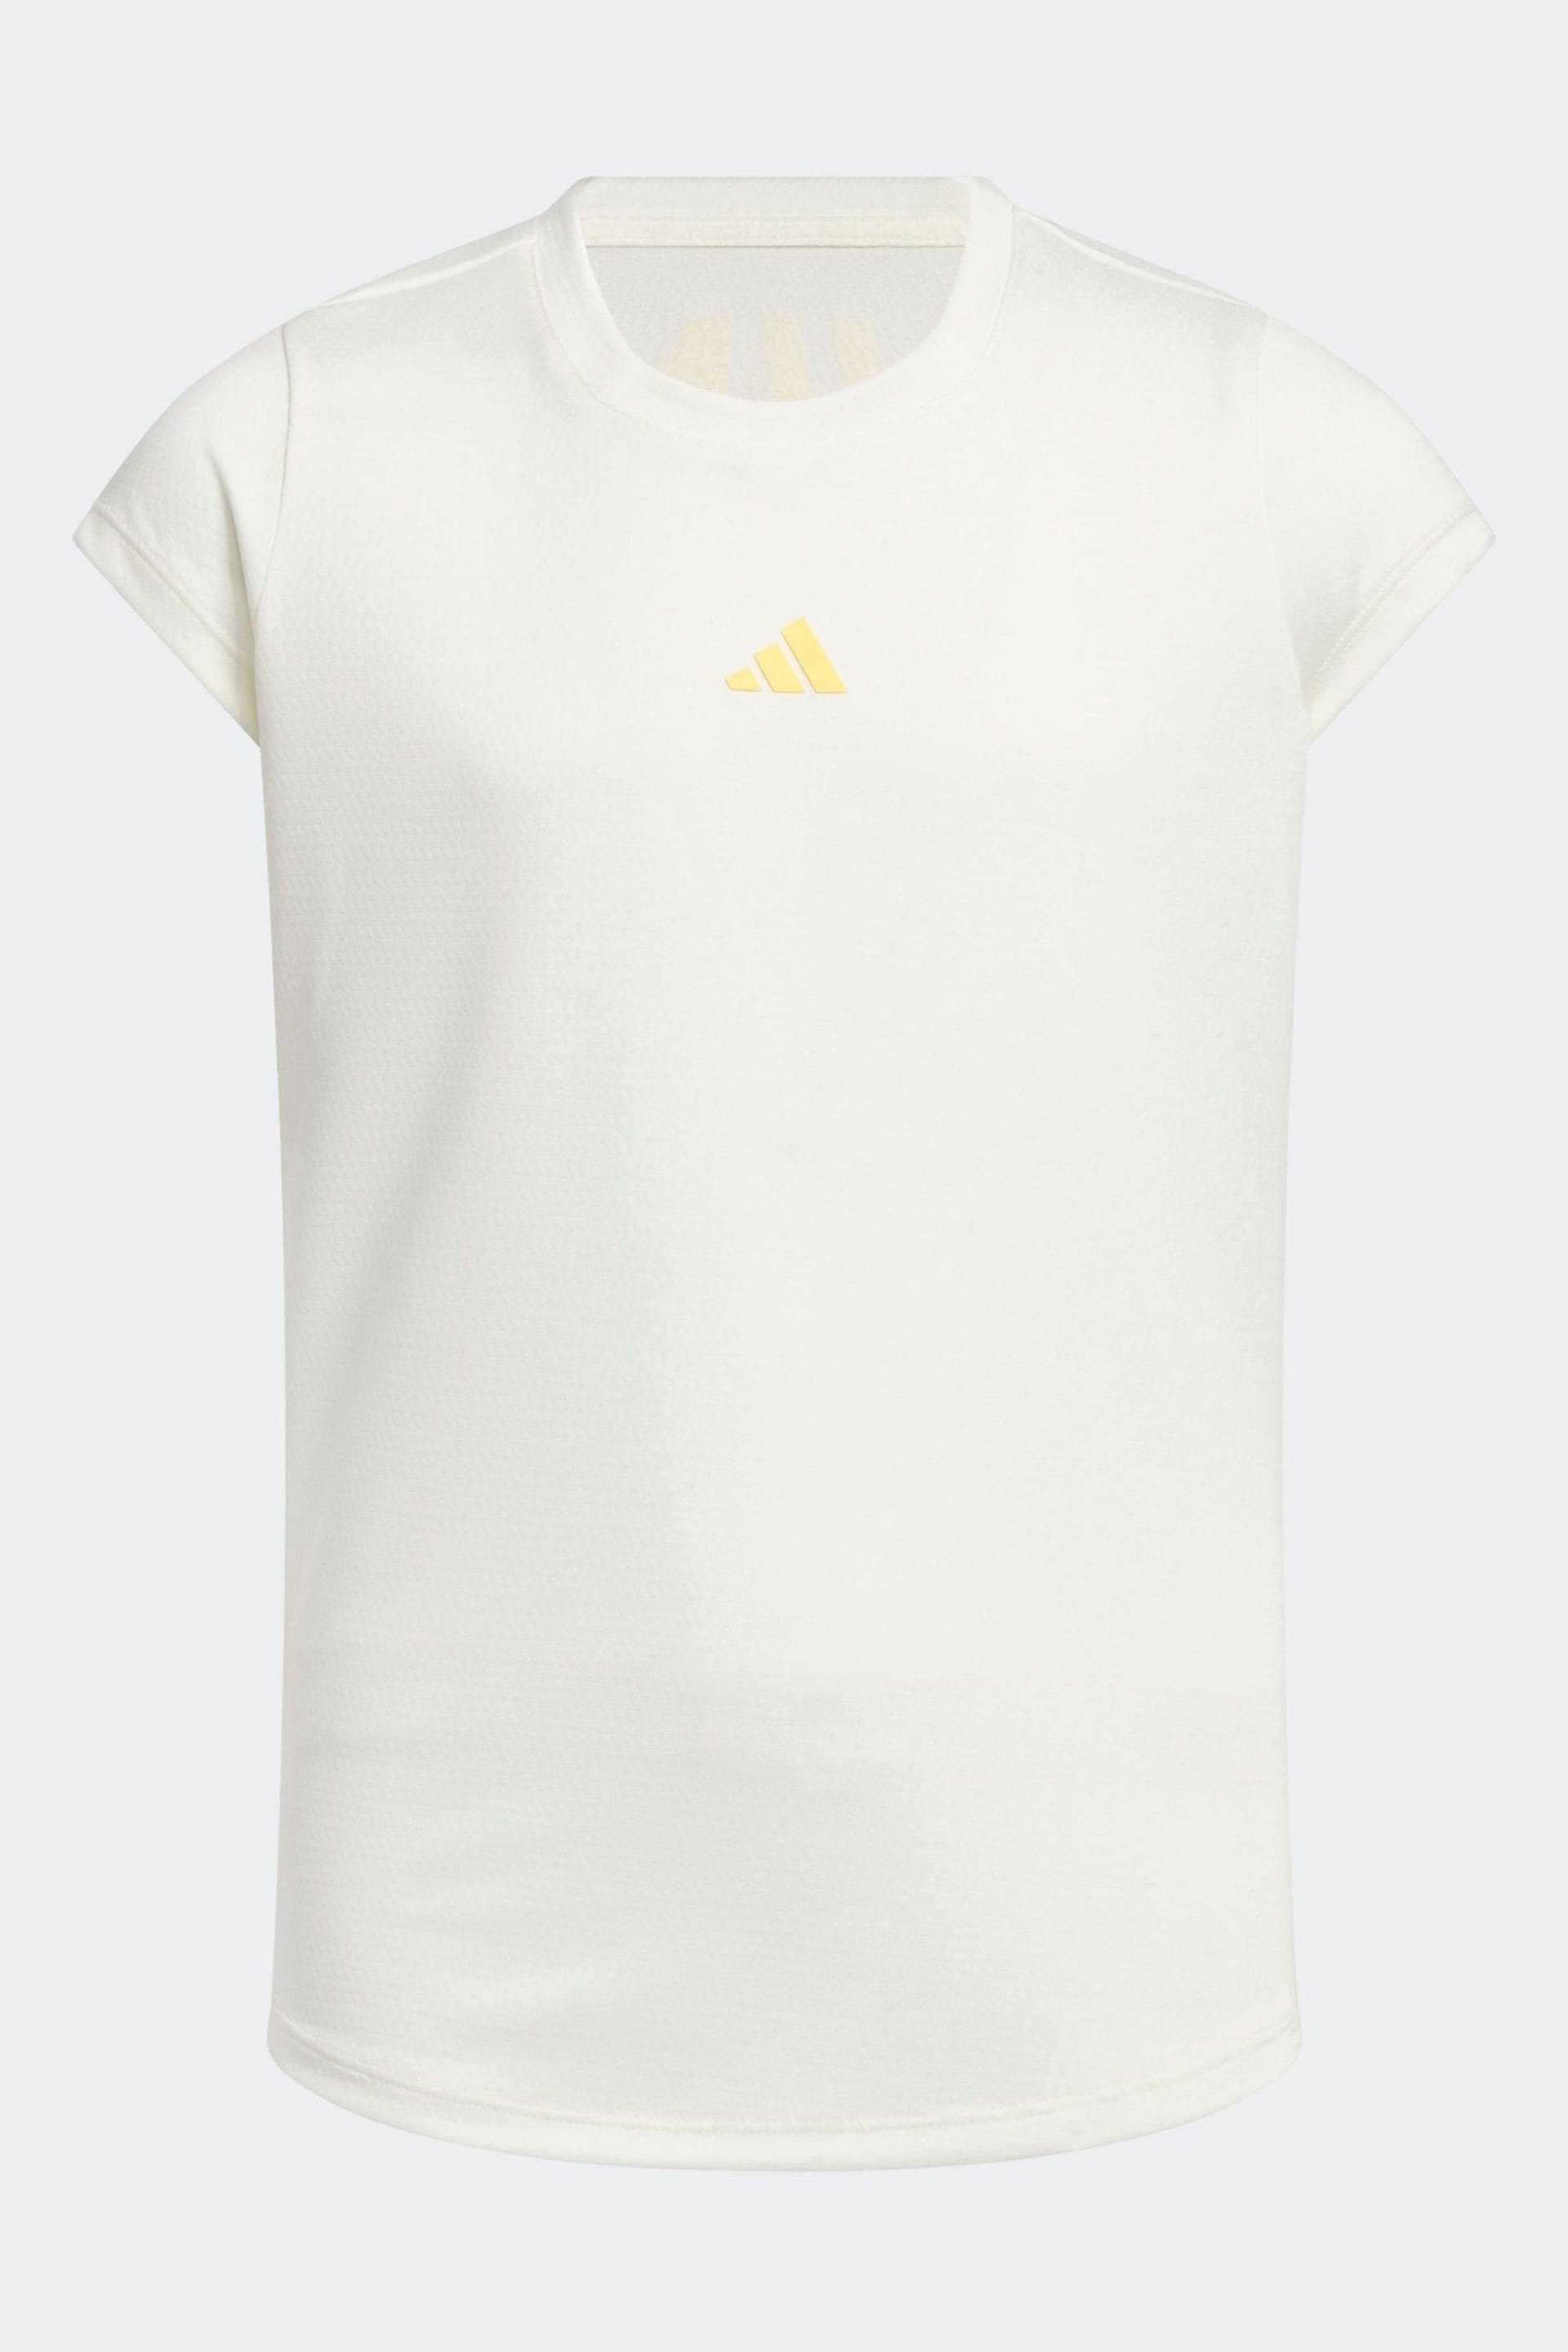 adidas Golf Cream Heatdry Sport T-Shirt - Image 3 of 6